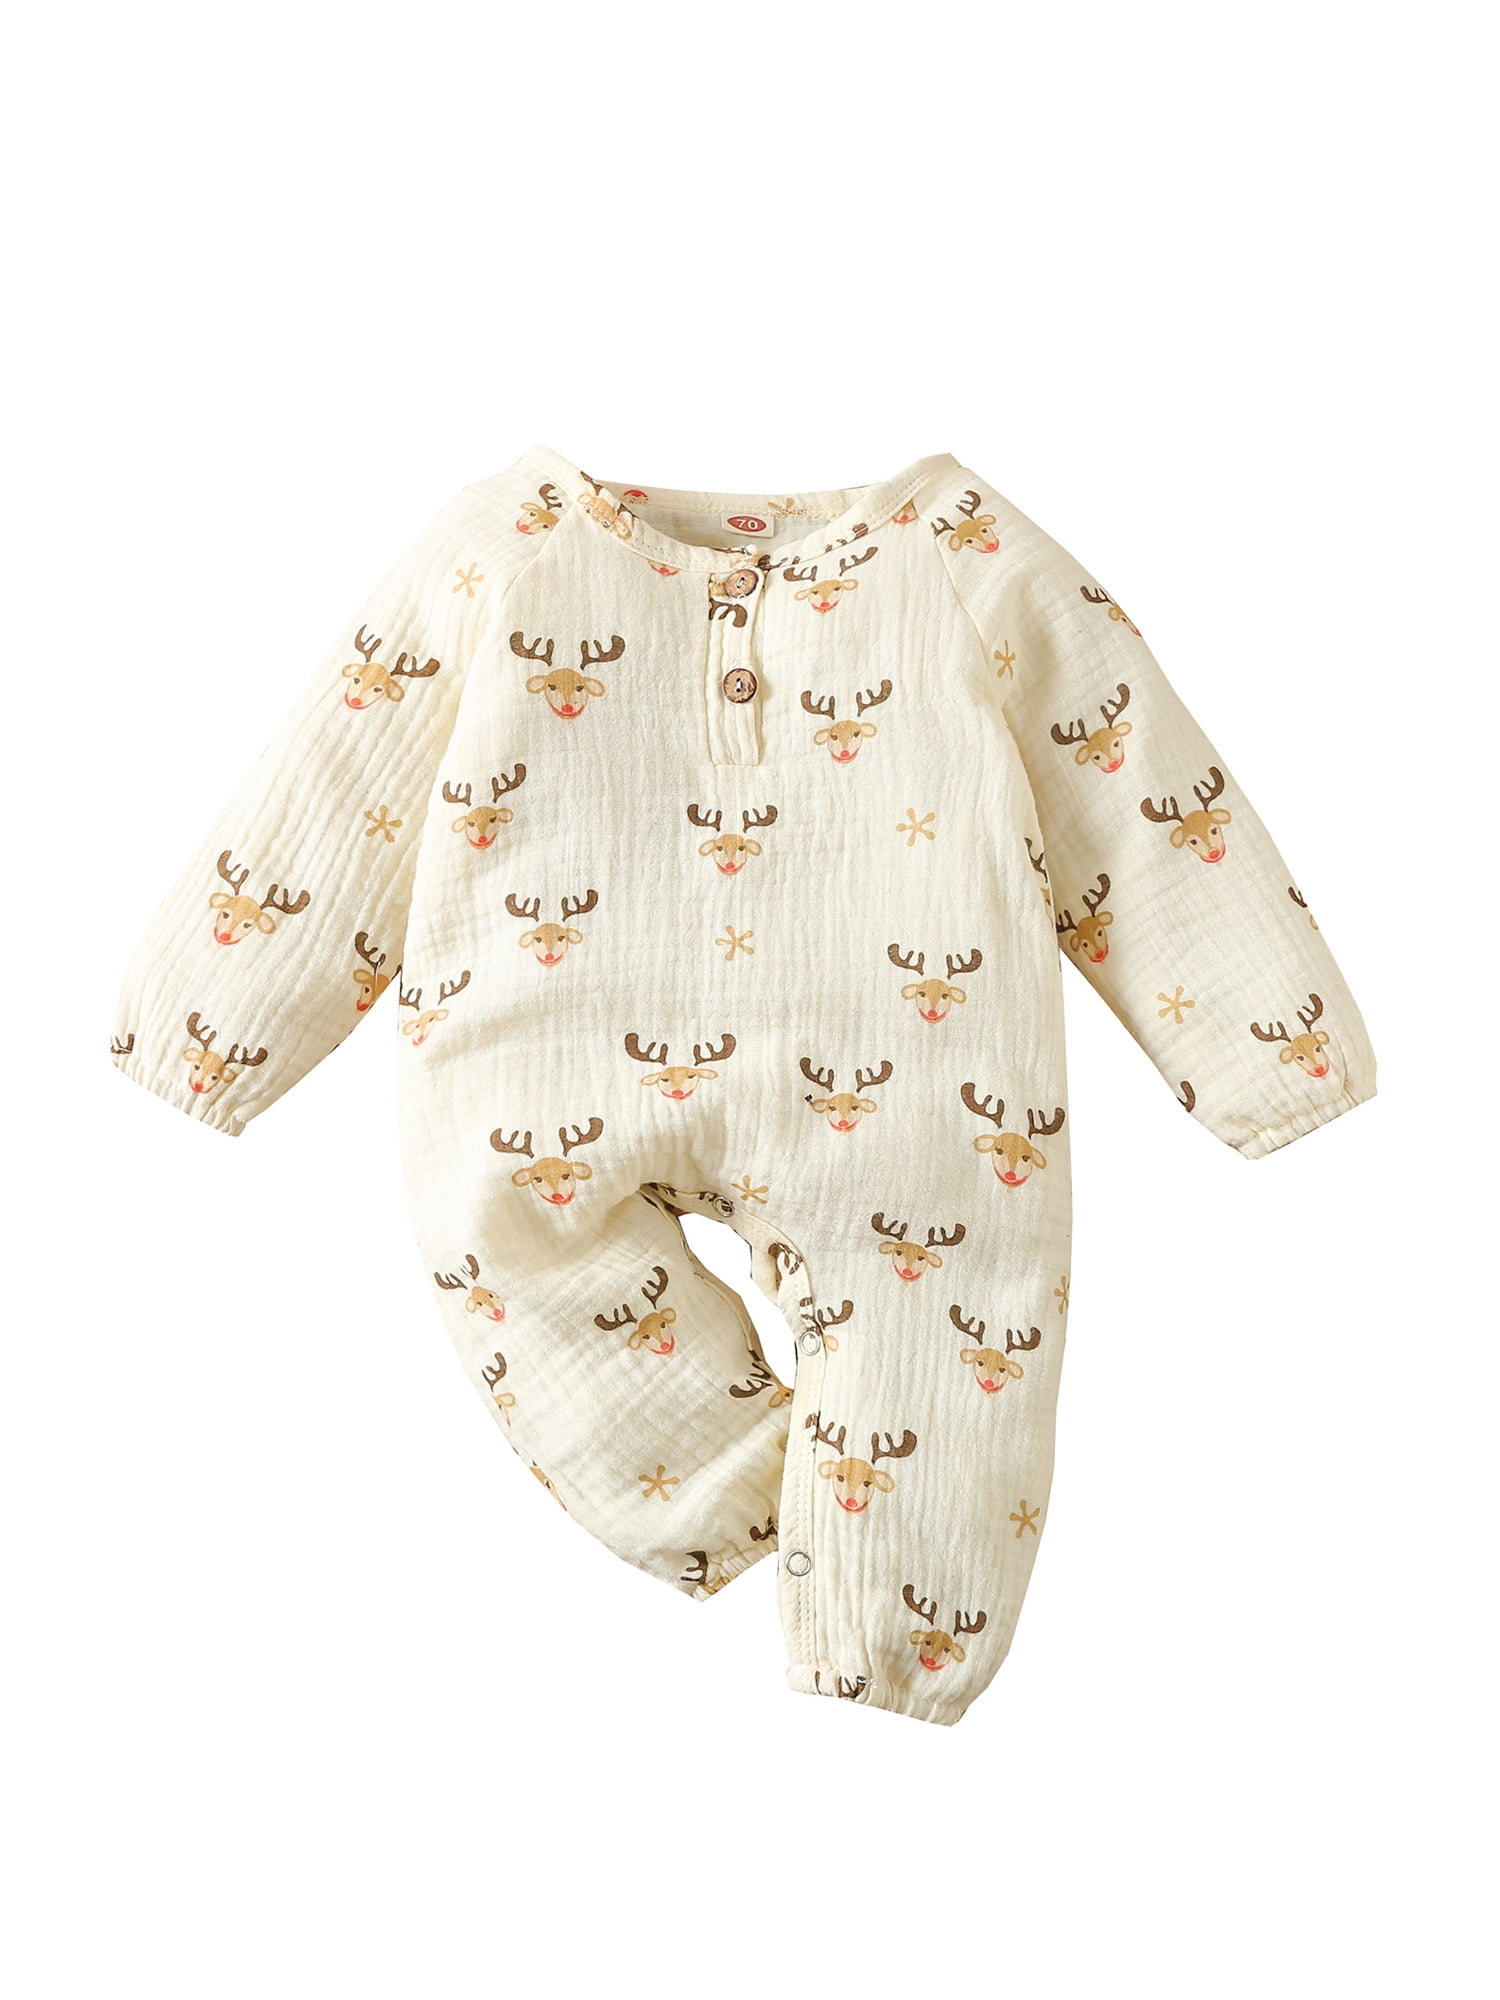 Newborn baby cartoon cotton bodysuits romper clothes jumpsuits 0#24 Months nx 